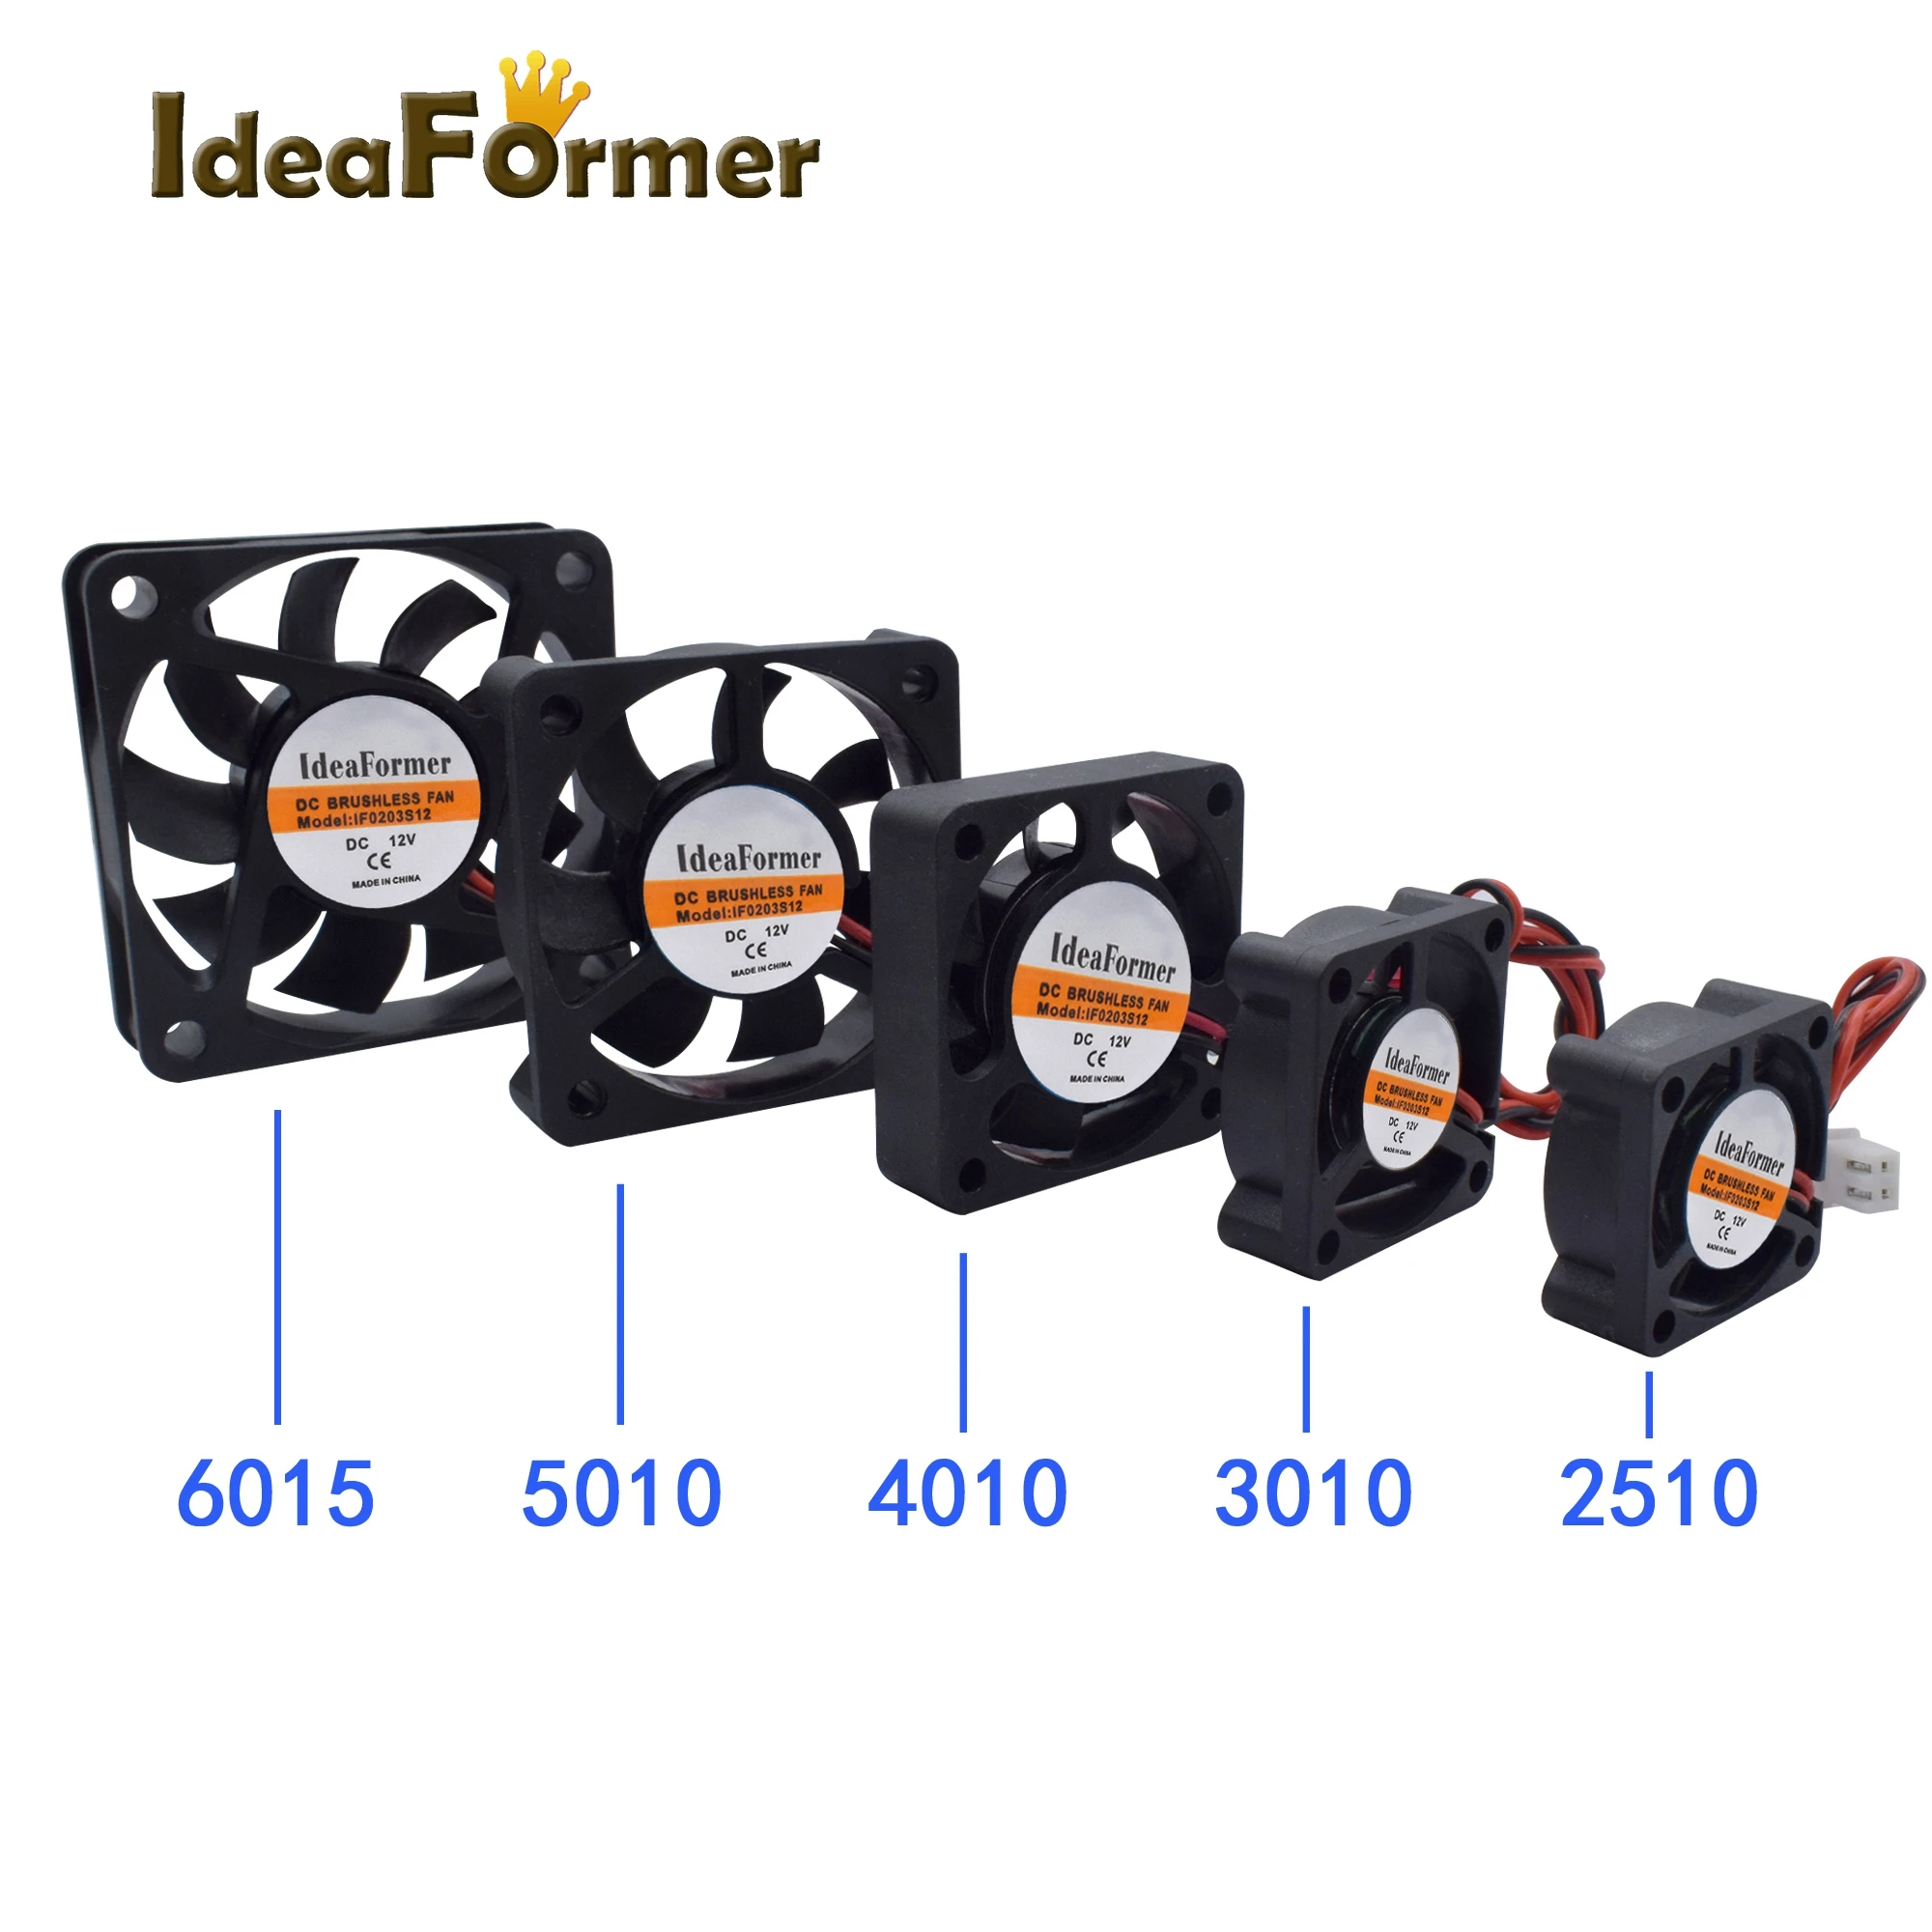 3D Printer Cooling fan 2510 3010 4010 5010 6015mm With 2Pin XH2.54 Cable Cooler DC 5V 12V 24V Multiple Options Cooling Fan.